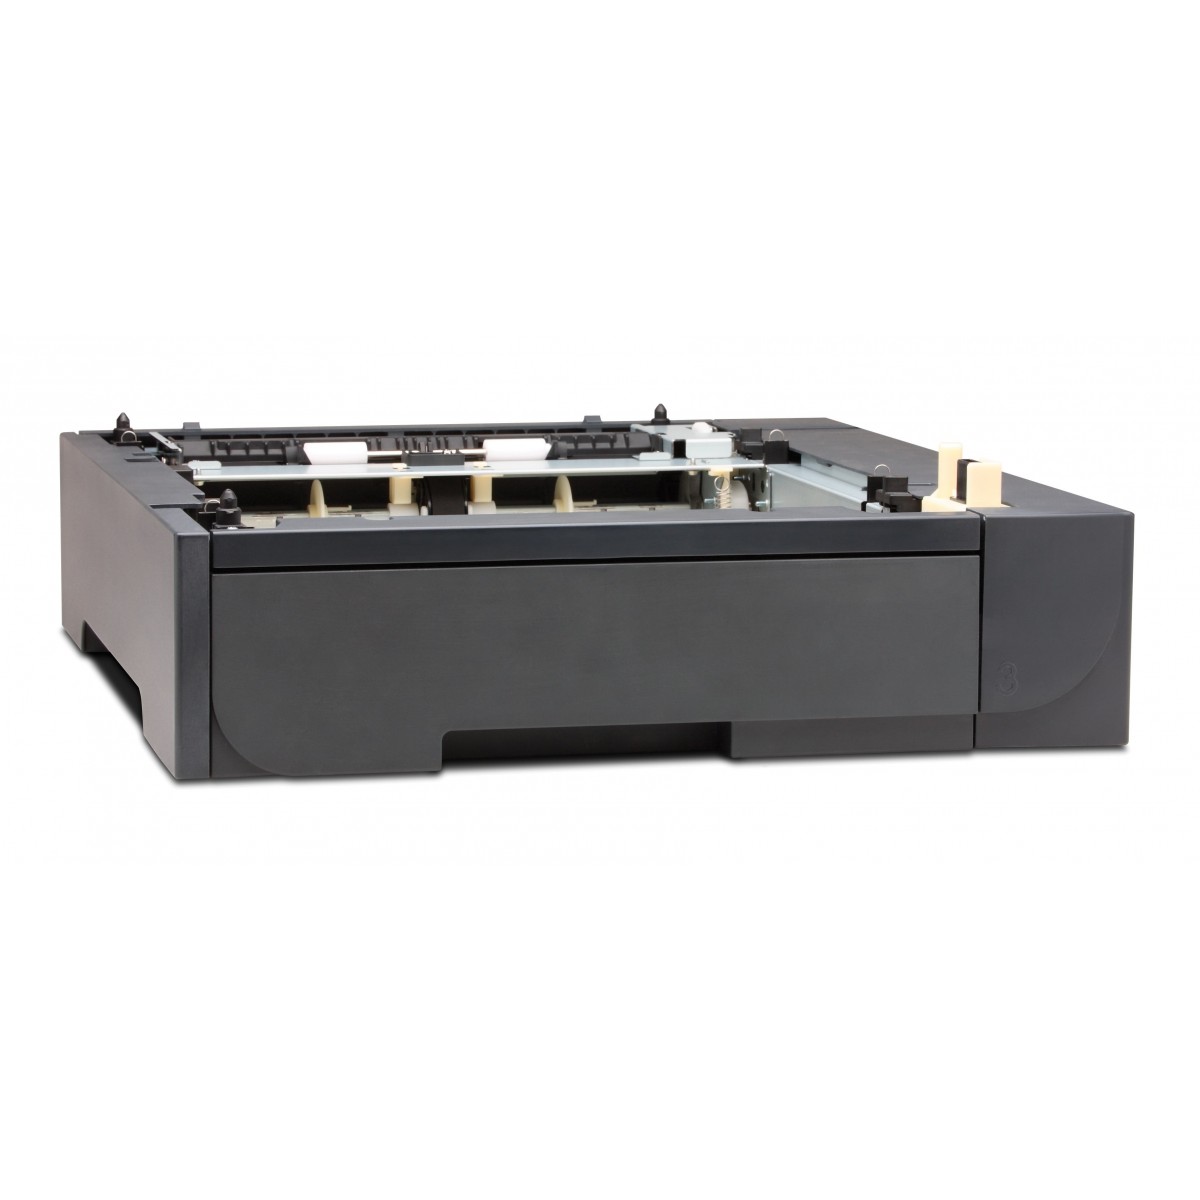 HP Q3952A - Paper tray - HP - LaserJet 2820 - 2830 - 2840 - 250 sheets - Black - 581.6 mm